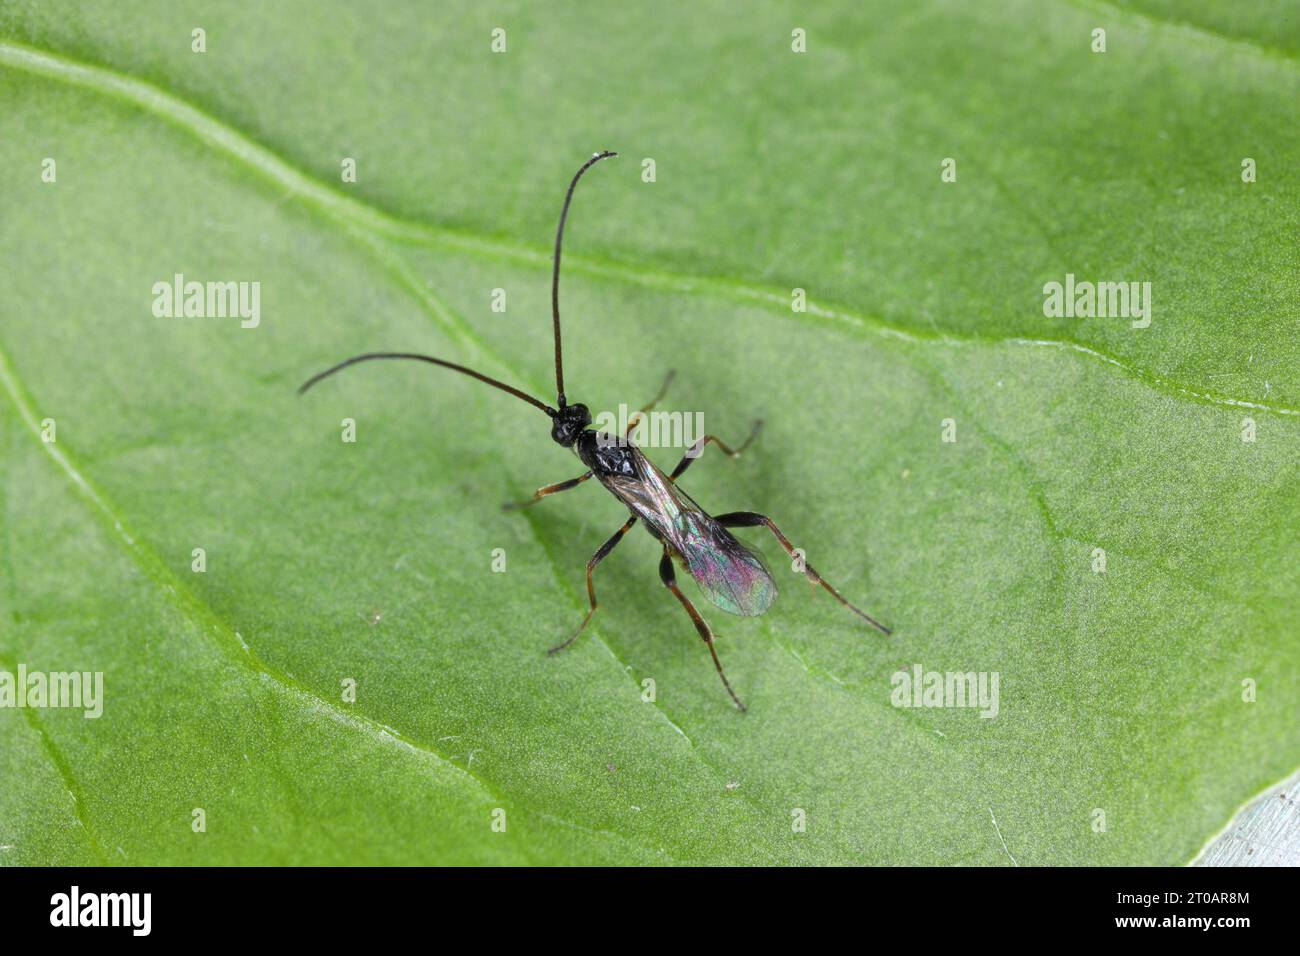 Ichneumonid Wasp perched on a green leaf. Stock Photo